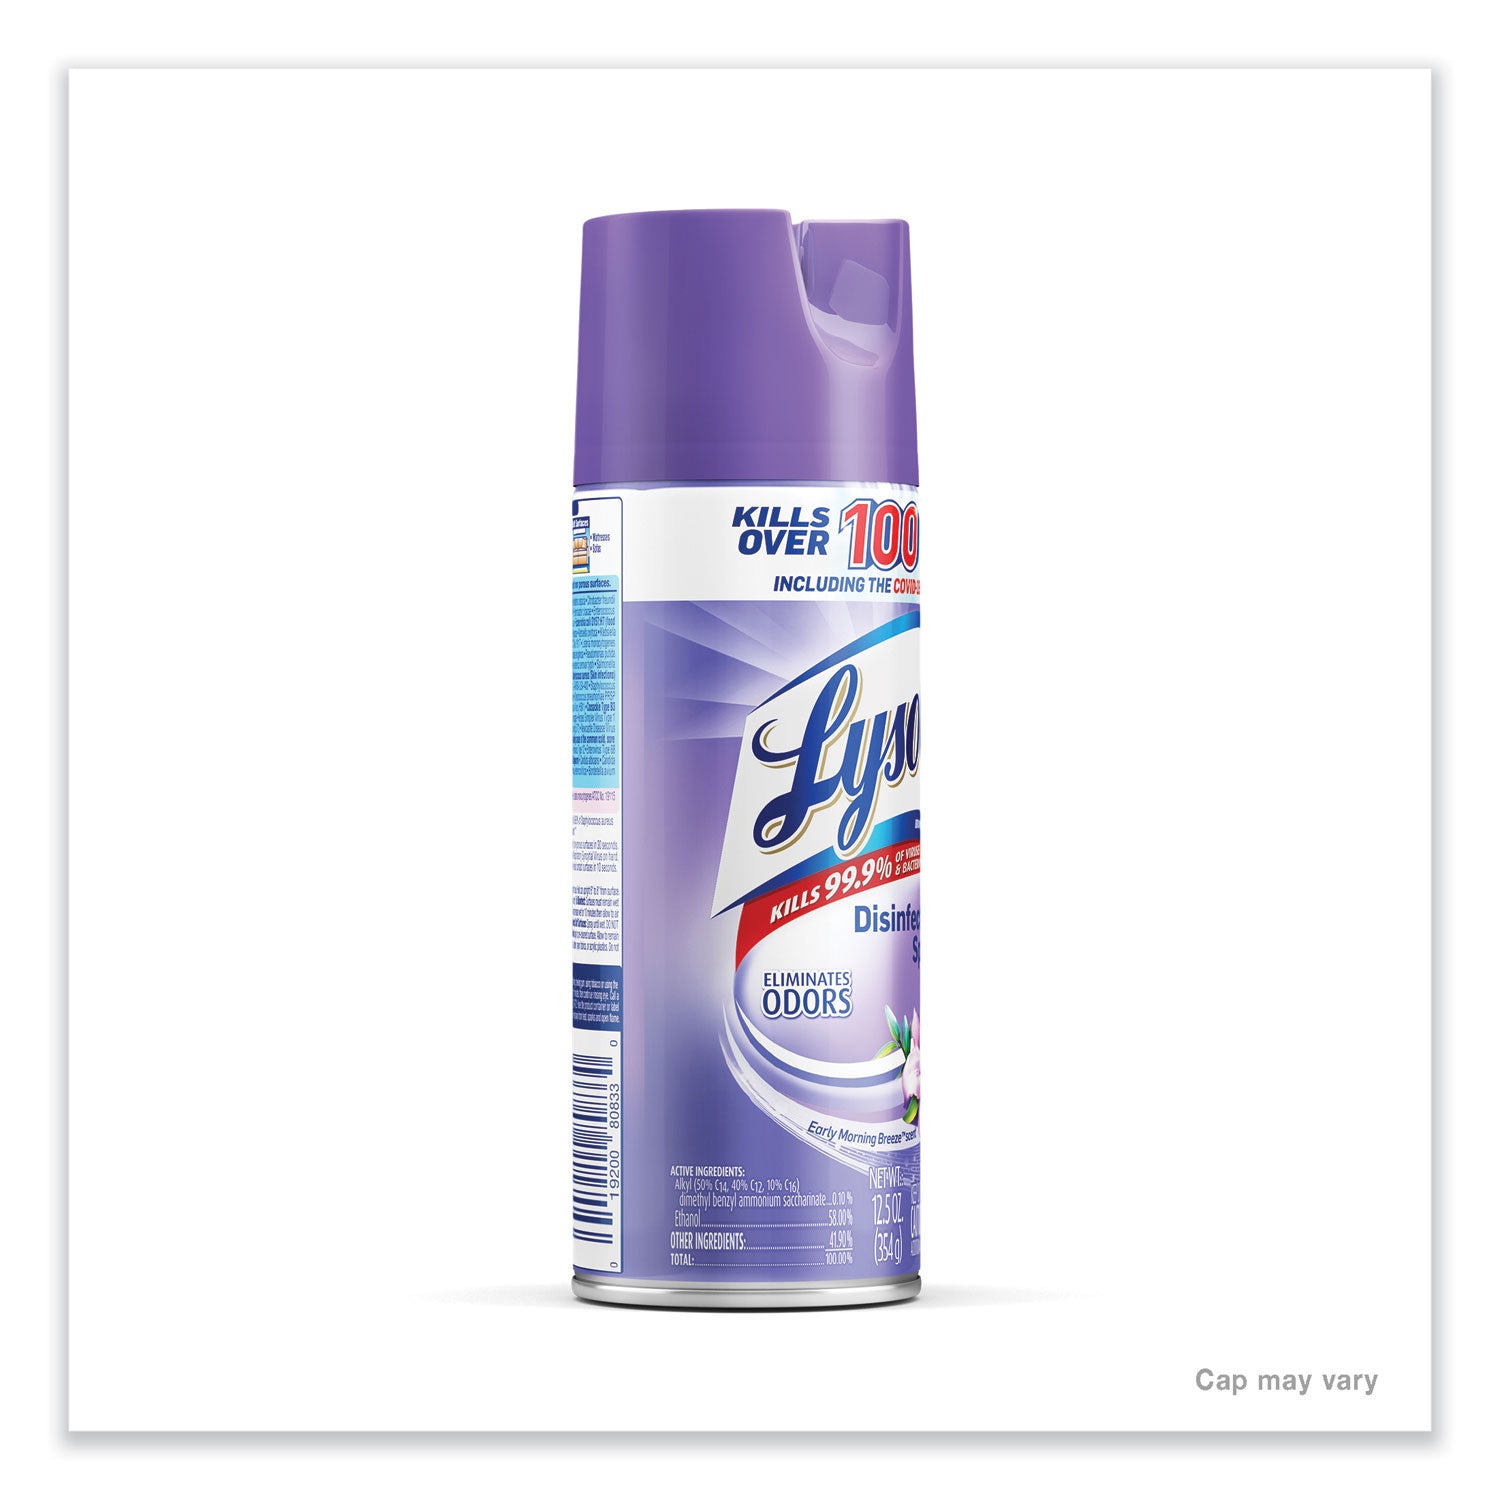 Disinfectant Spray, Early Morning Breeze, 12.5 oz Aerosol Spray - 